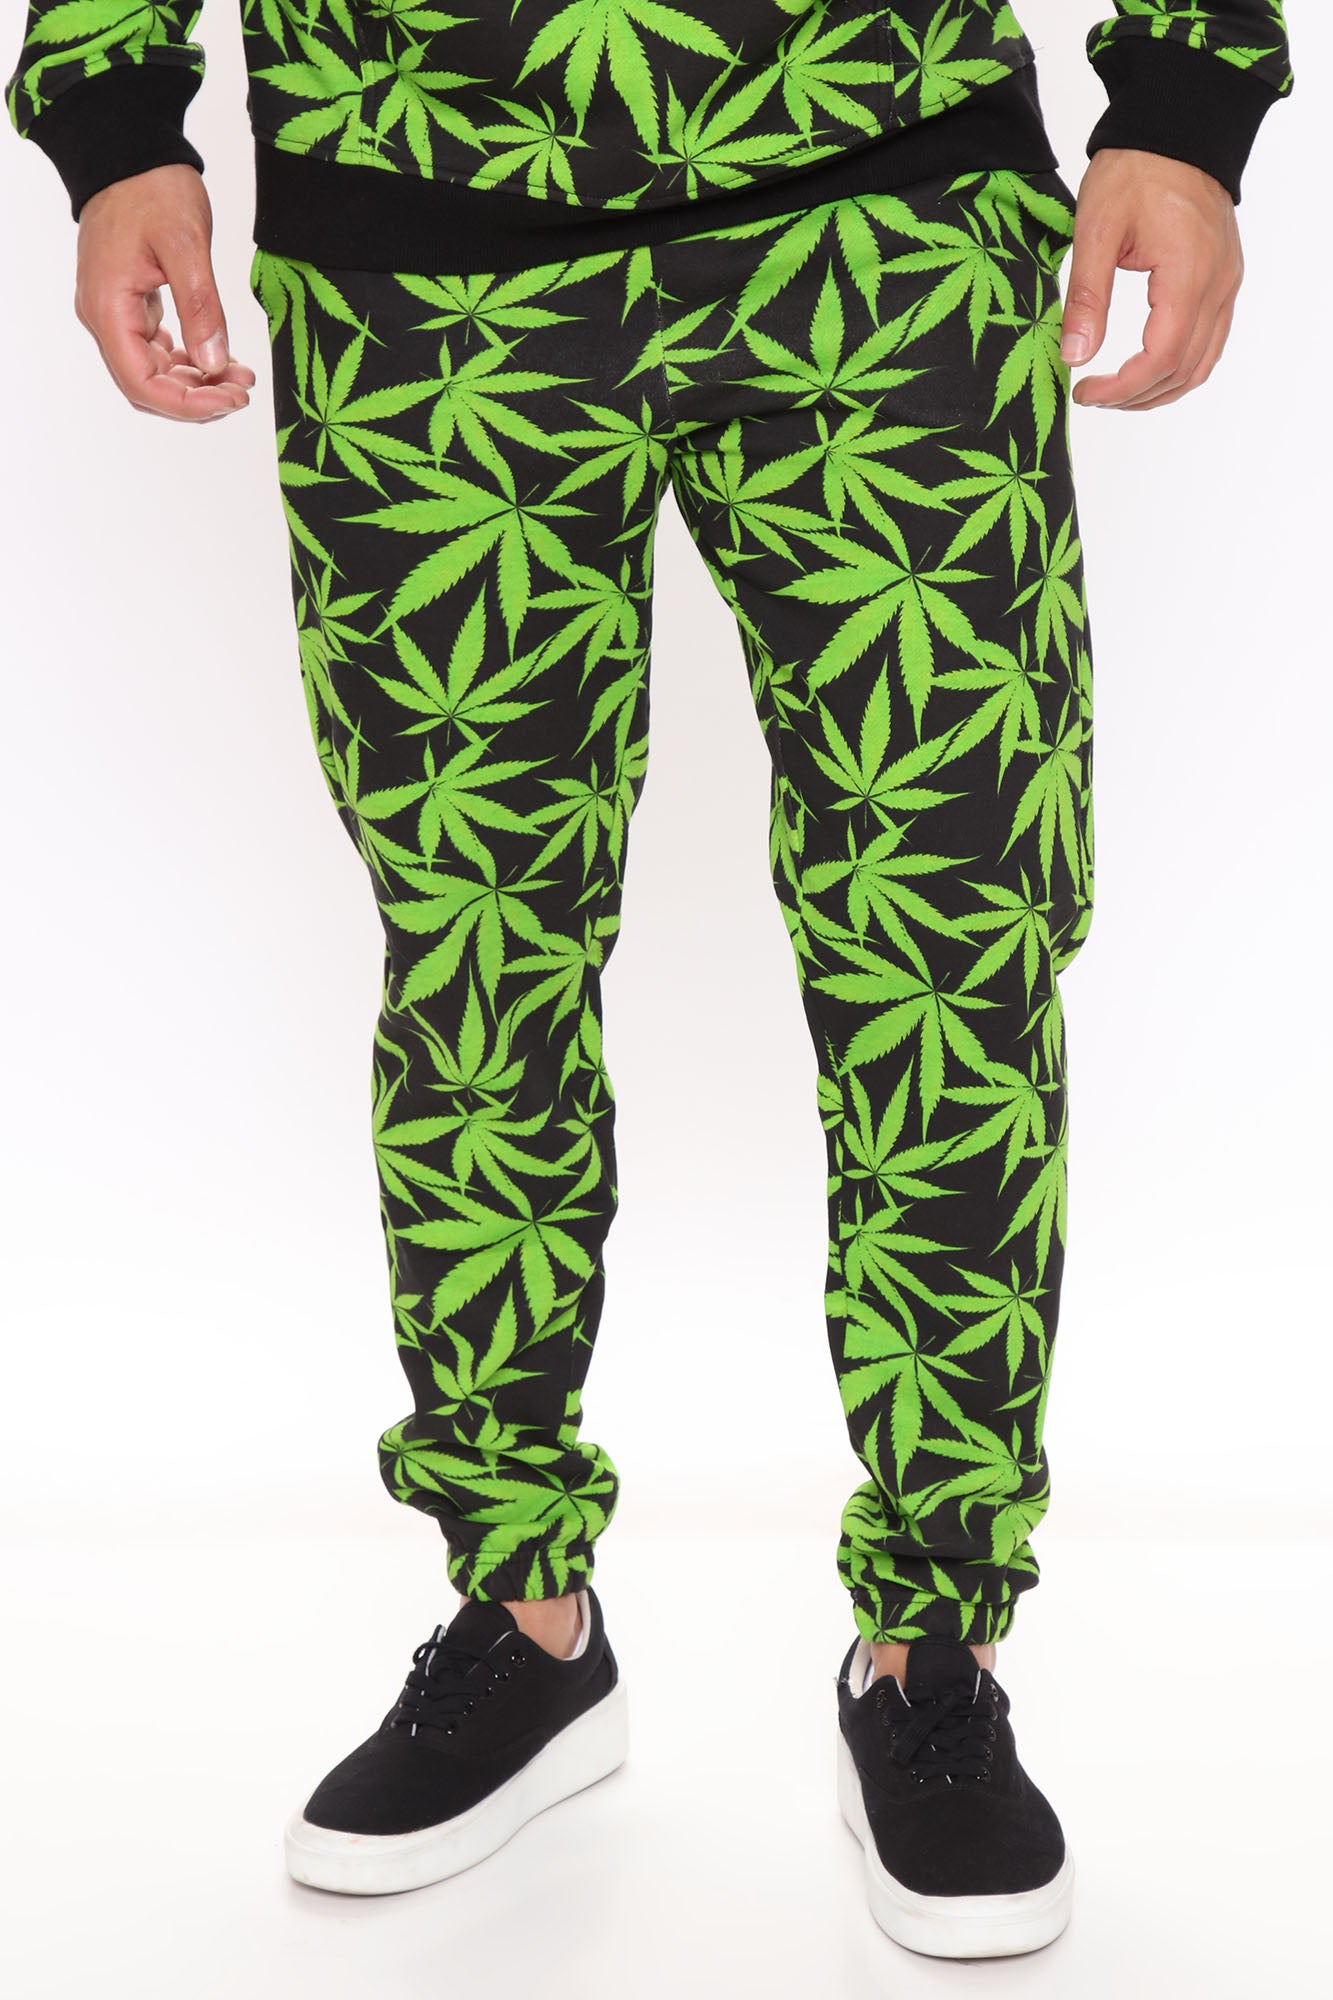 All over Weed Print Jogger - Black/Green, Fashion Nova, Mens Pants